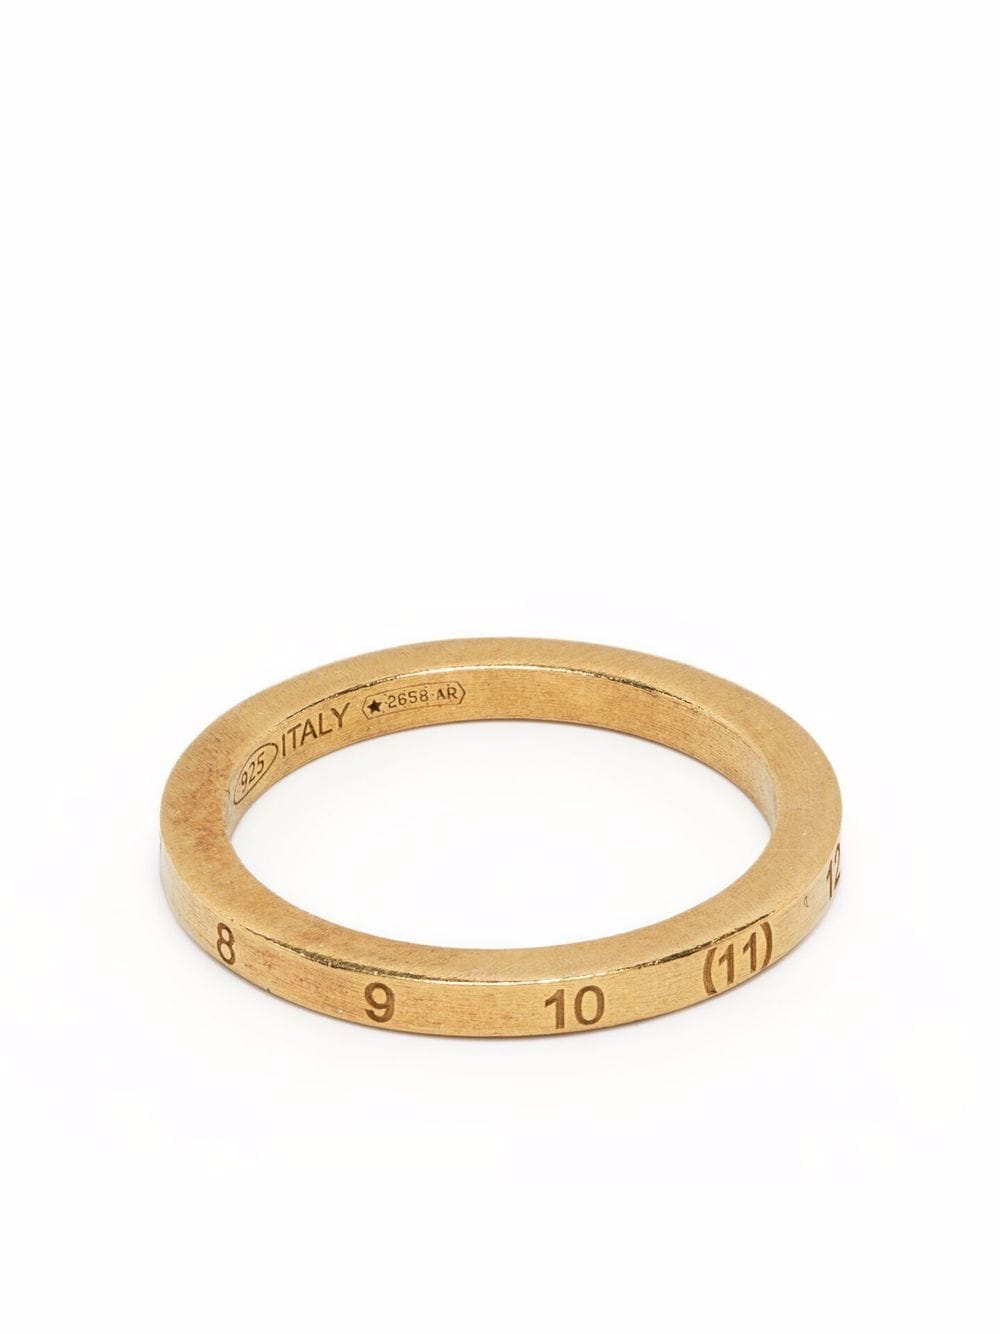 engraved-number ring